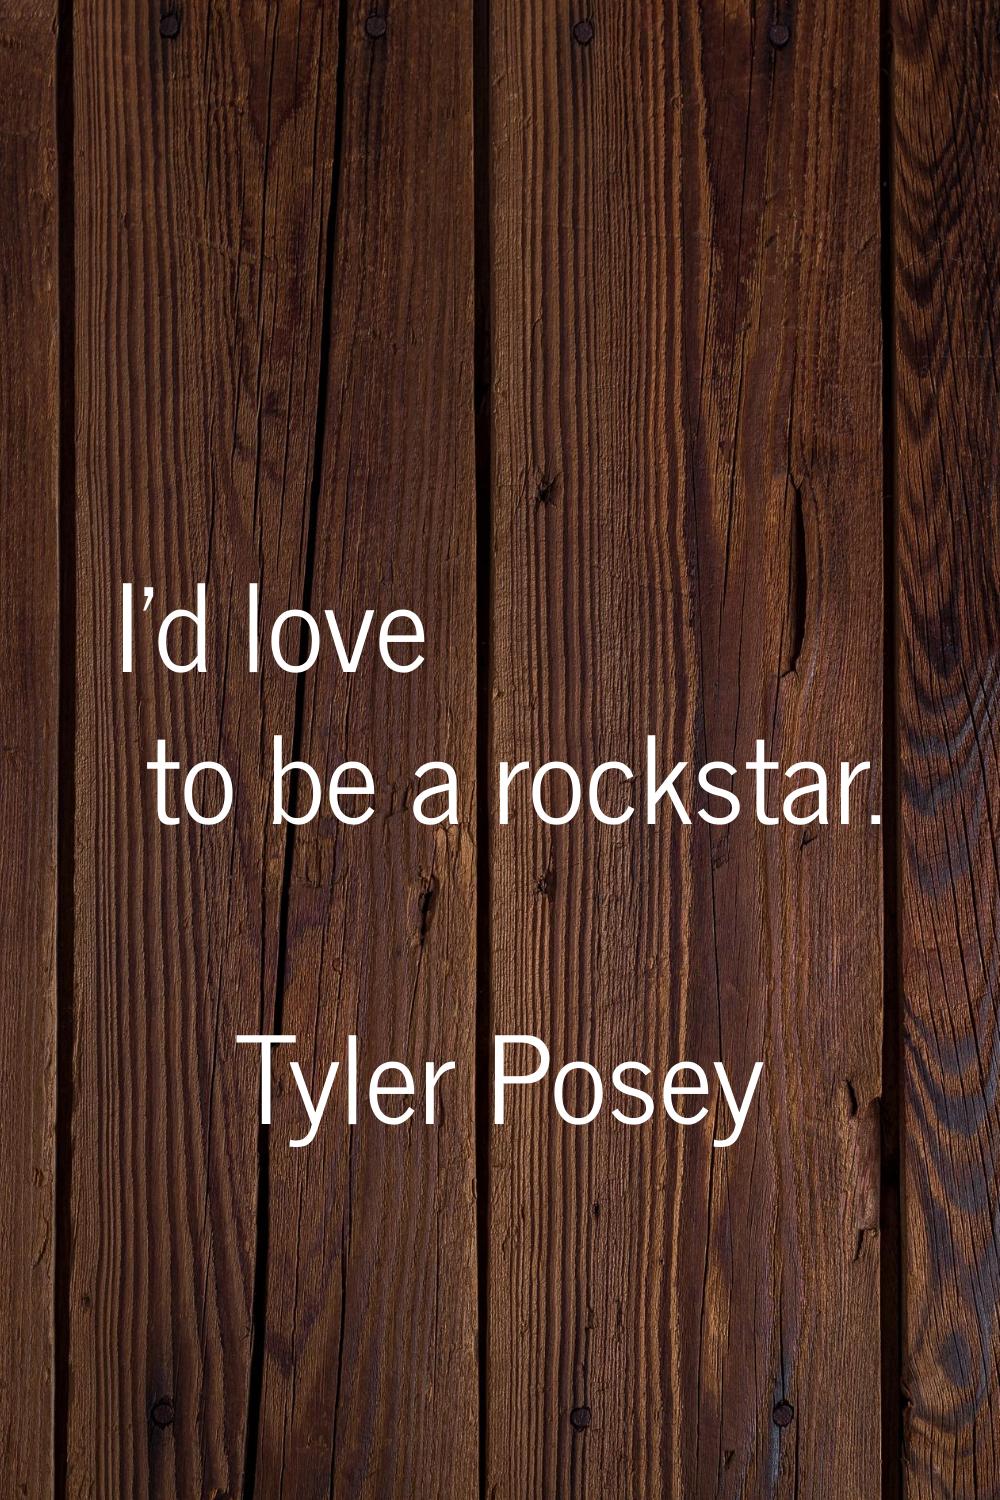 I'd love to be a rockstar.